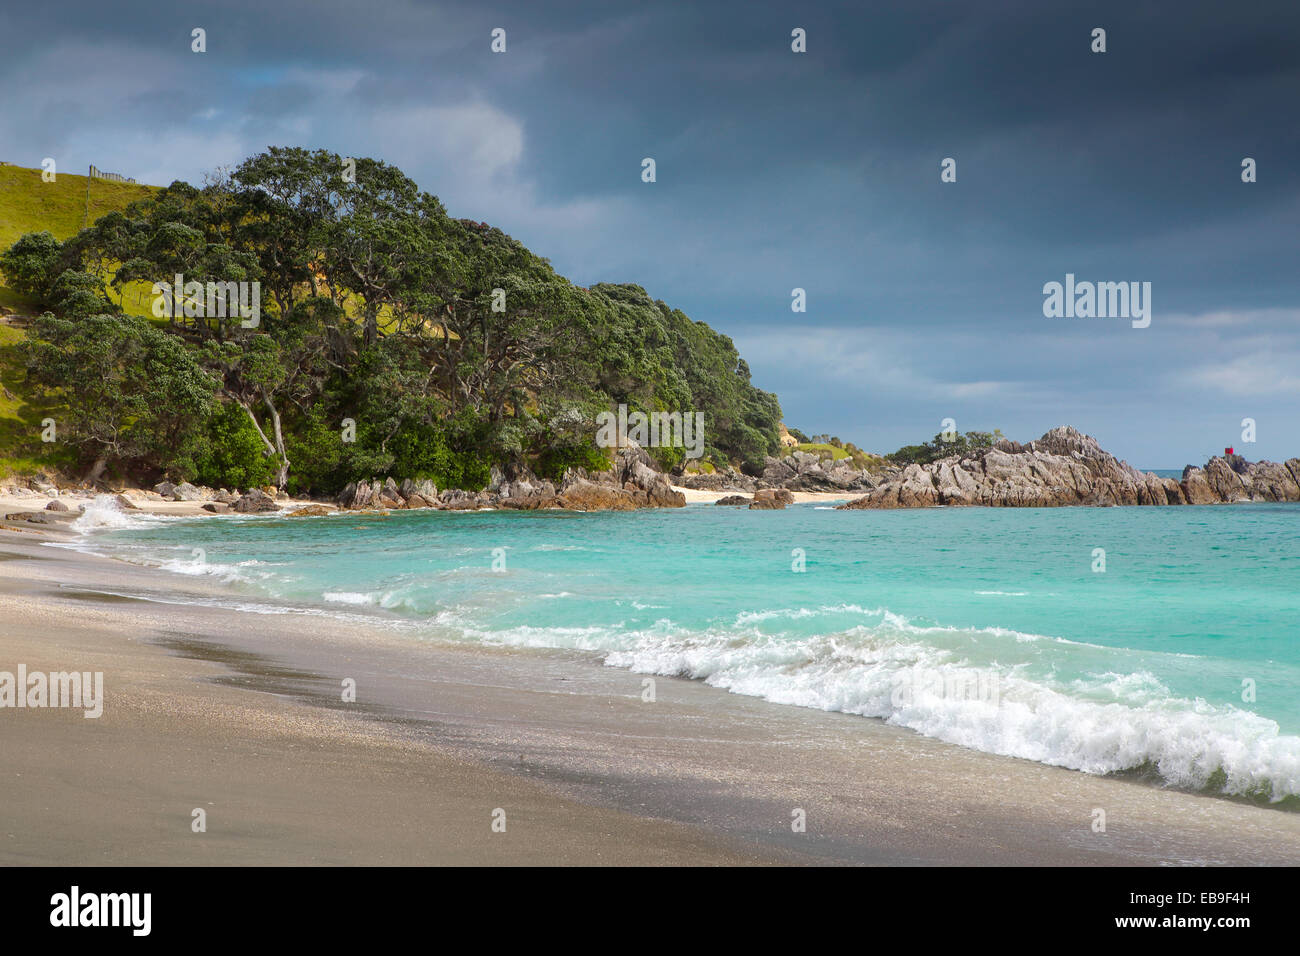 Pohutukawa trees fringe sandy idyllic beach at Mount Maunganui, New Zealand Stock Photo